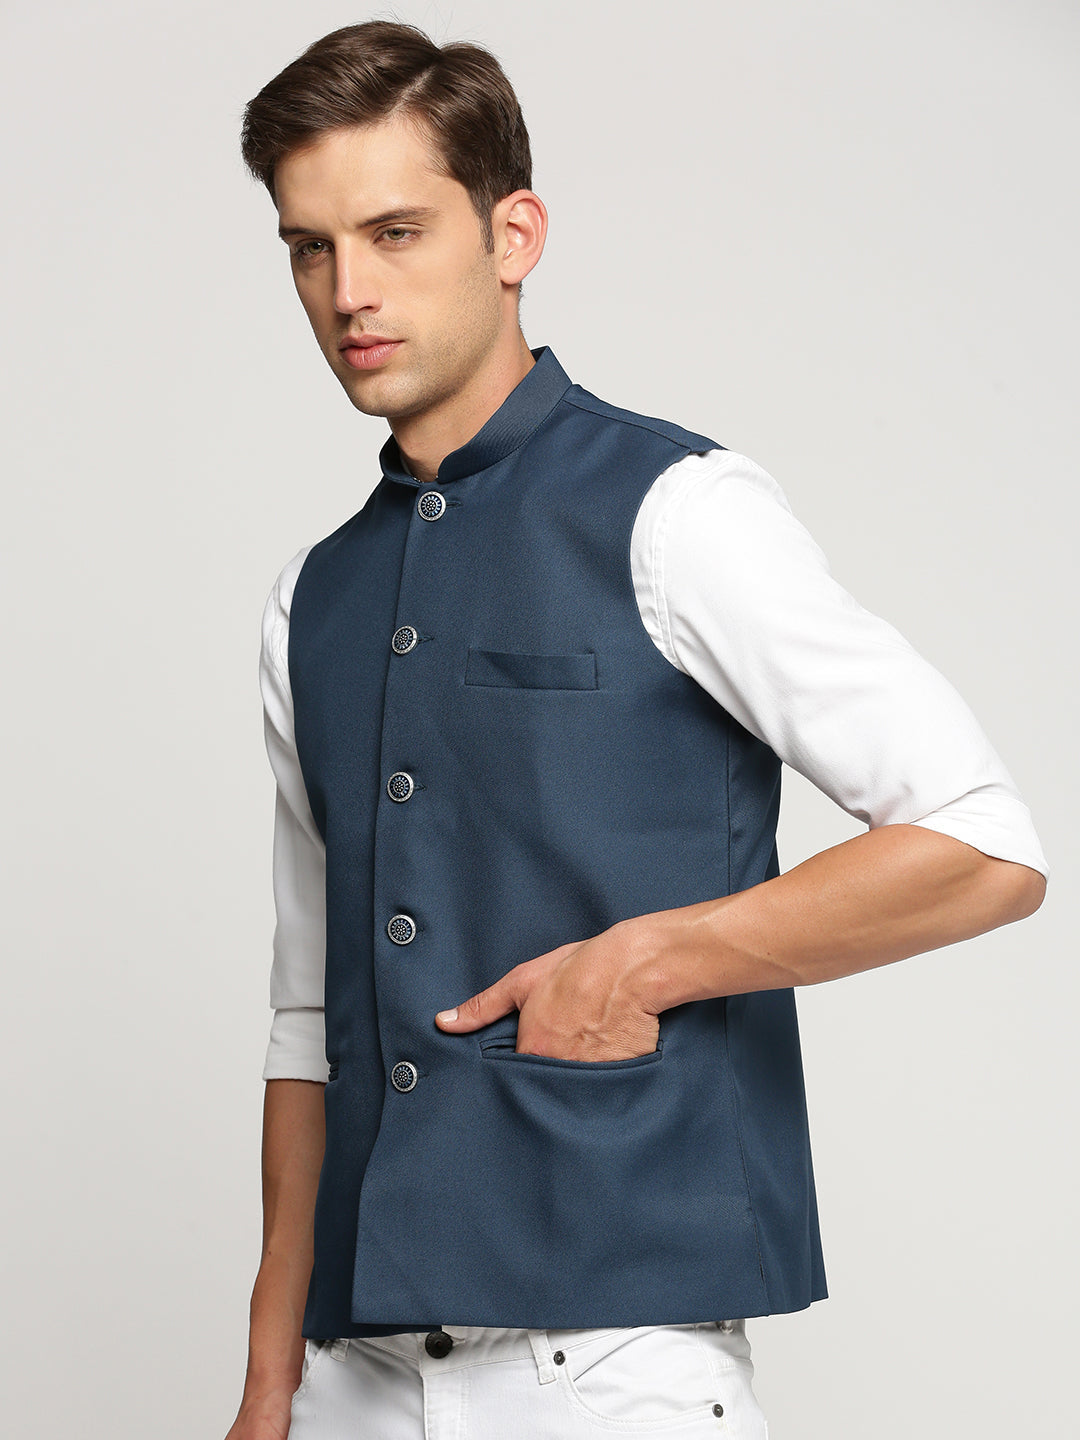 Men's Teal Mandarin Collar Solid Nehru Jacket